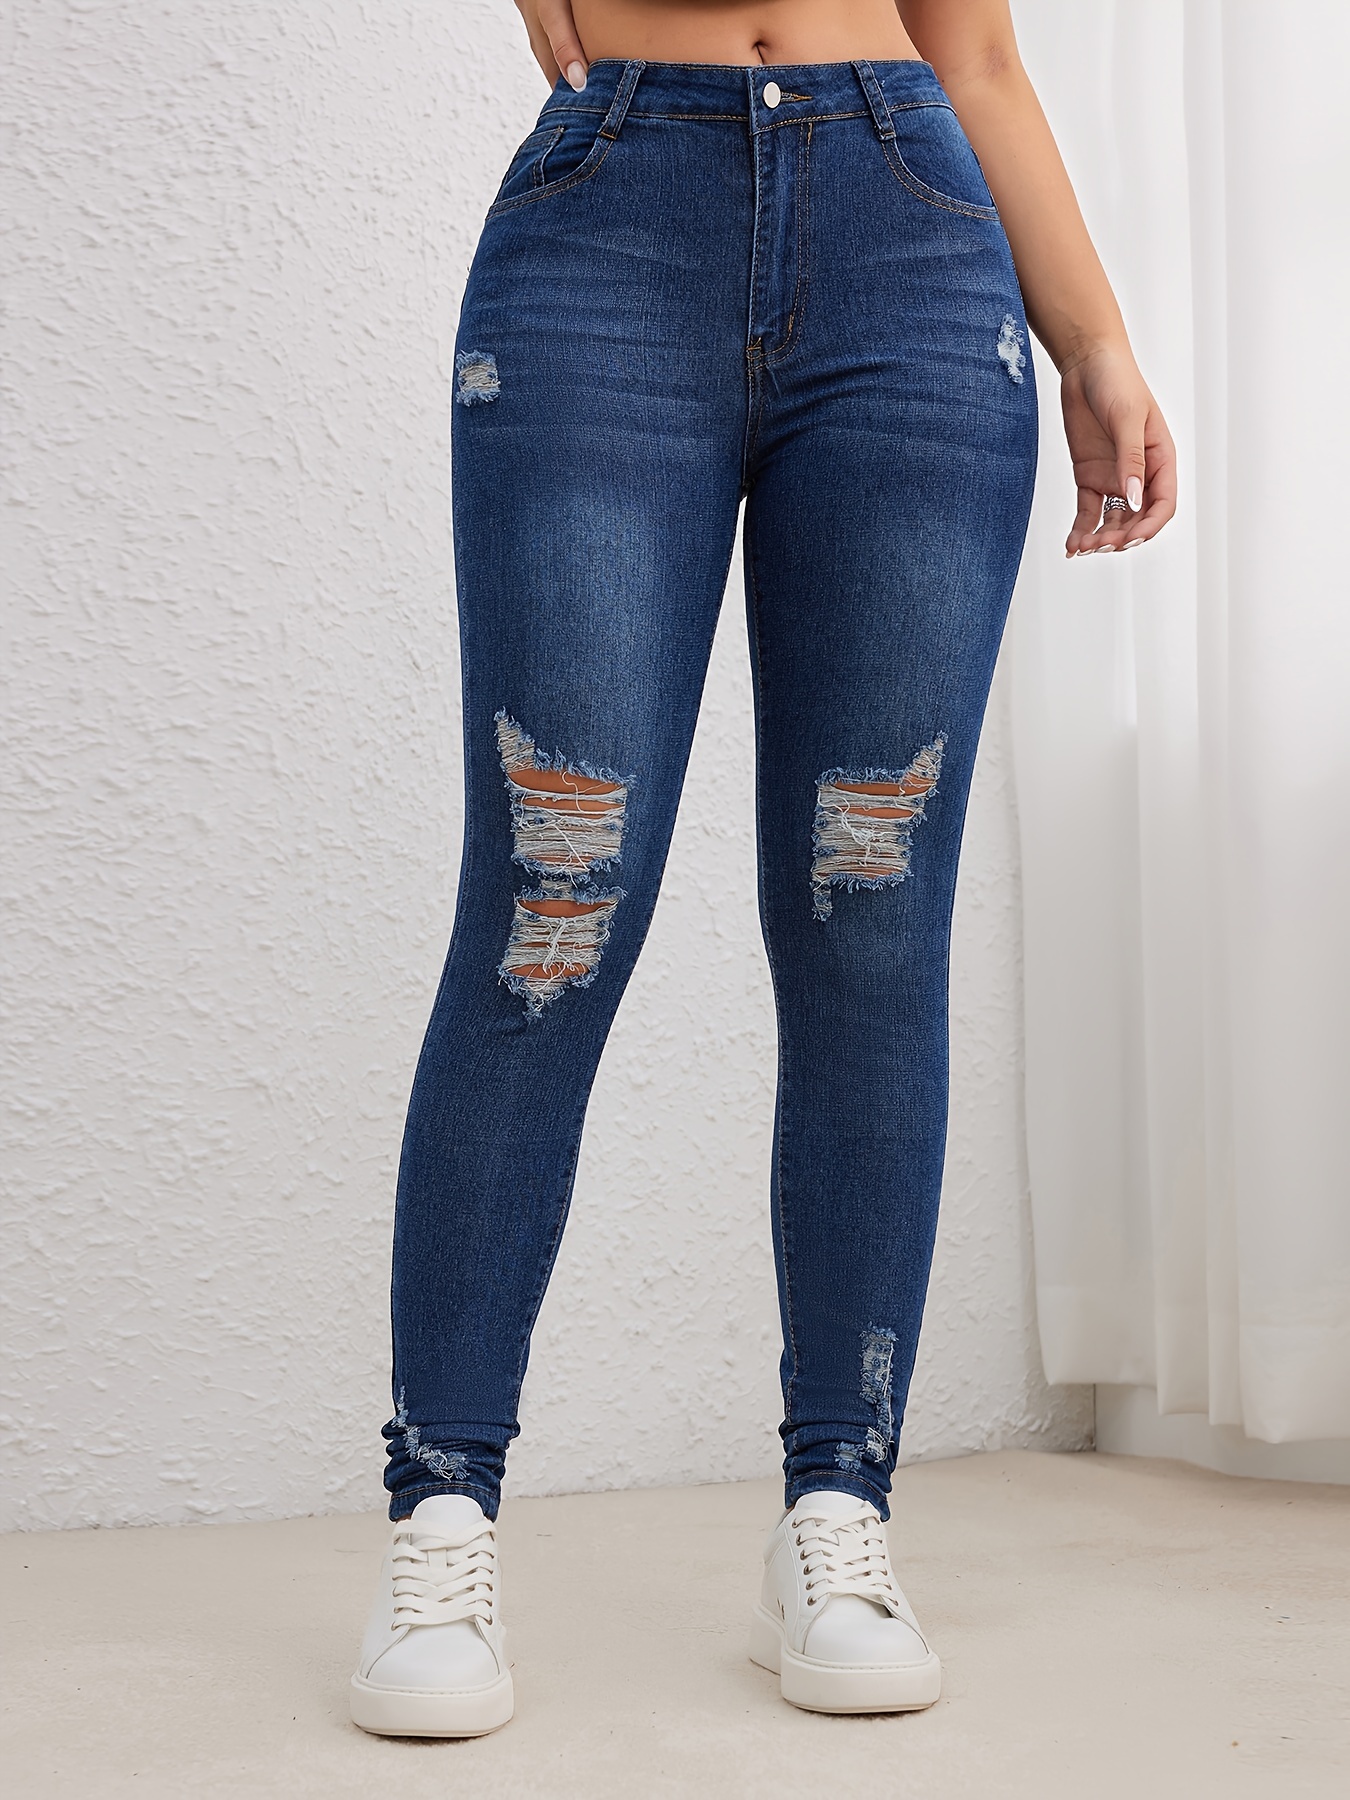 ABPHQTO Jeans sueltos de pierna recta rasgada azul cielo de tiro alto para  mujer